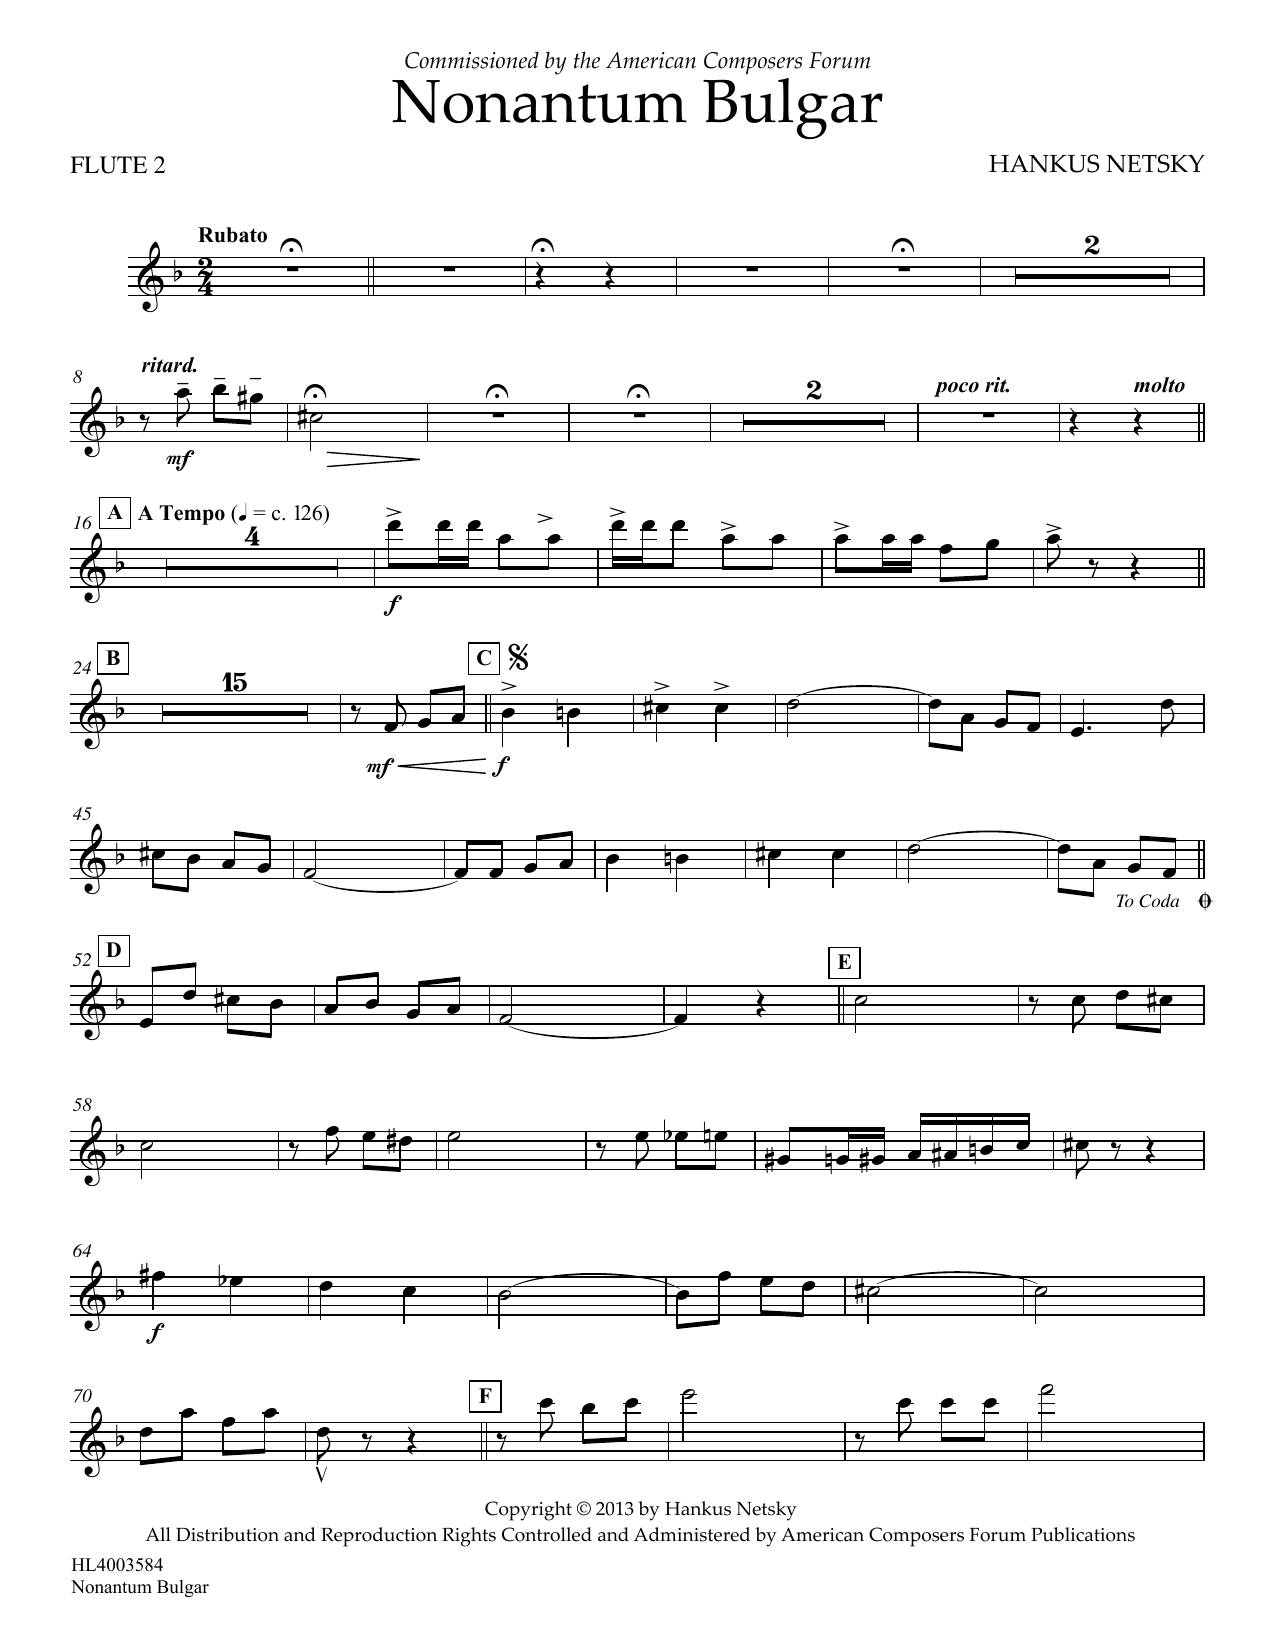 Download Hankus Netsky Nonantum Bulgar - Flute 2 Sheet Music